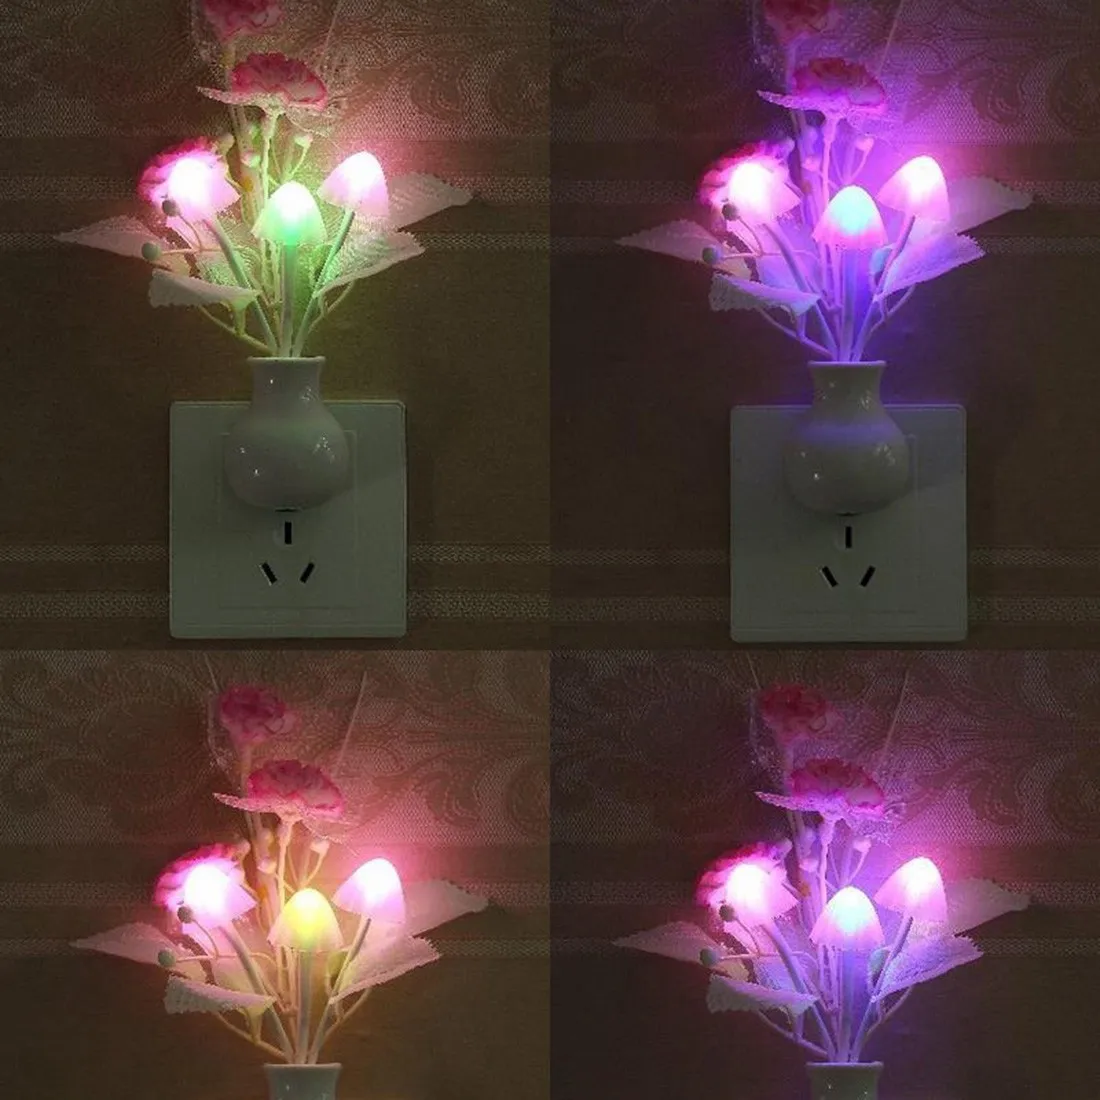 

Colorful Baby Romantic Dream Sensor LED Night Light Lamp Mushroom Flower Plant For Home Bedroom Decoration 110V US Plug